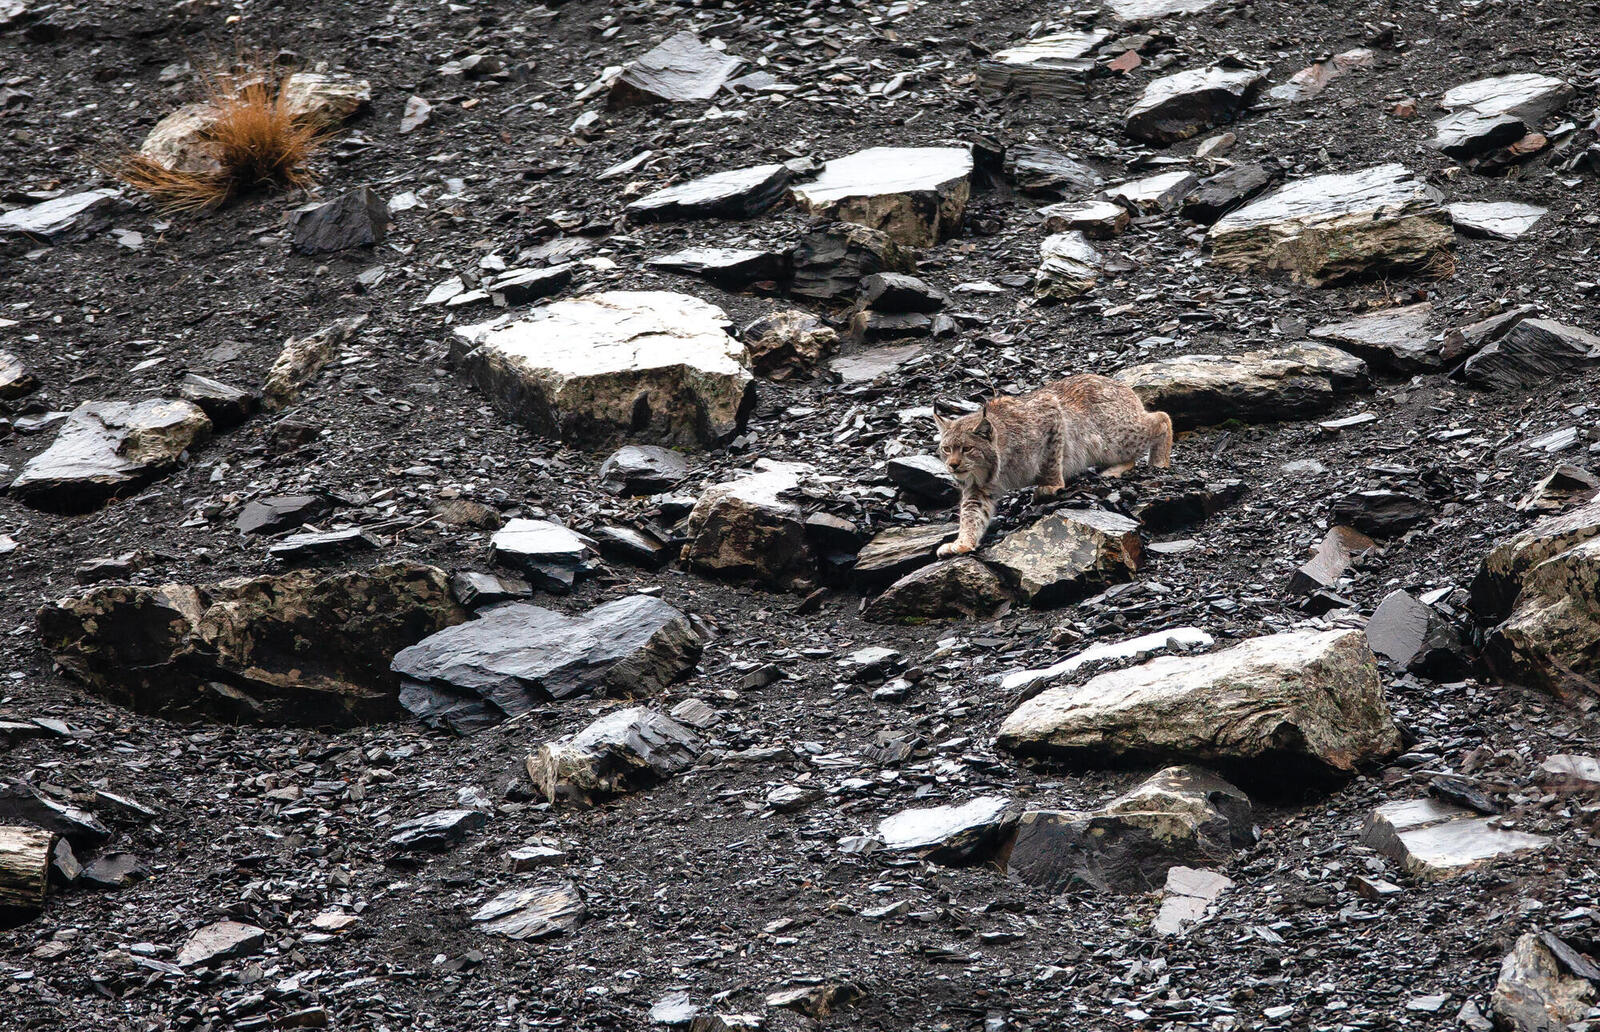 Lynx walking on rocky ground